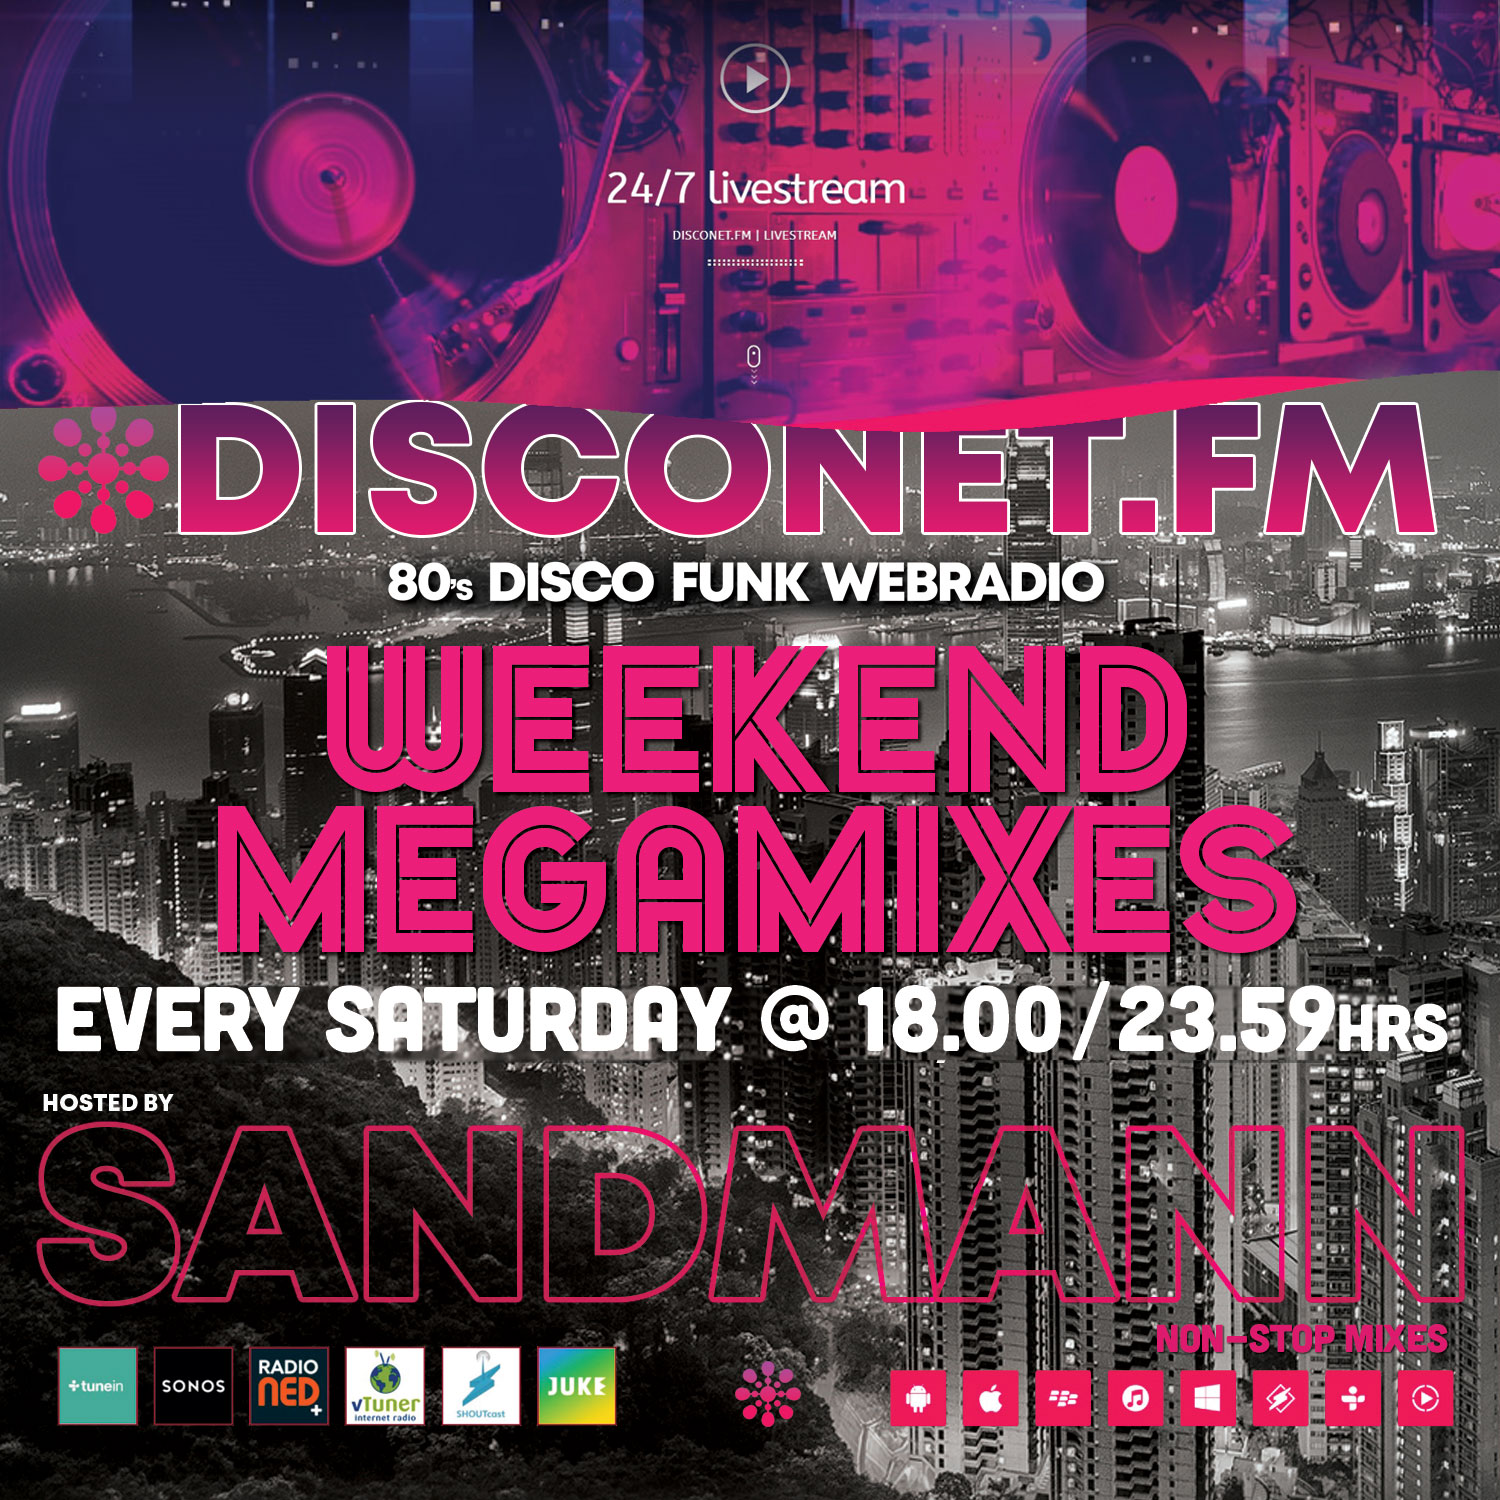 DISCONET.FM weekend megamixes by Sandmann